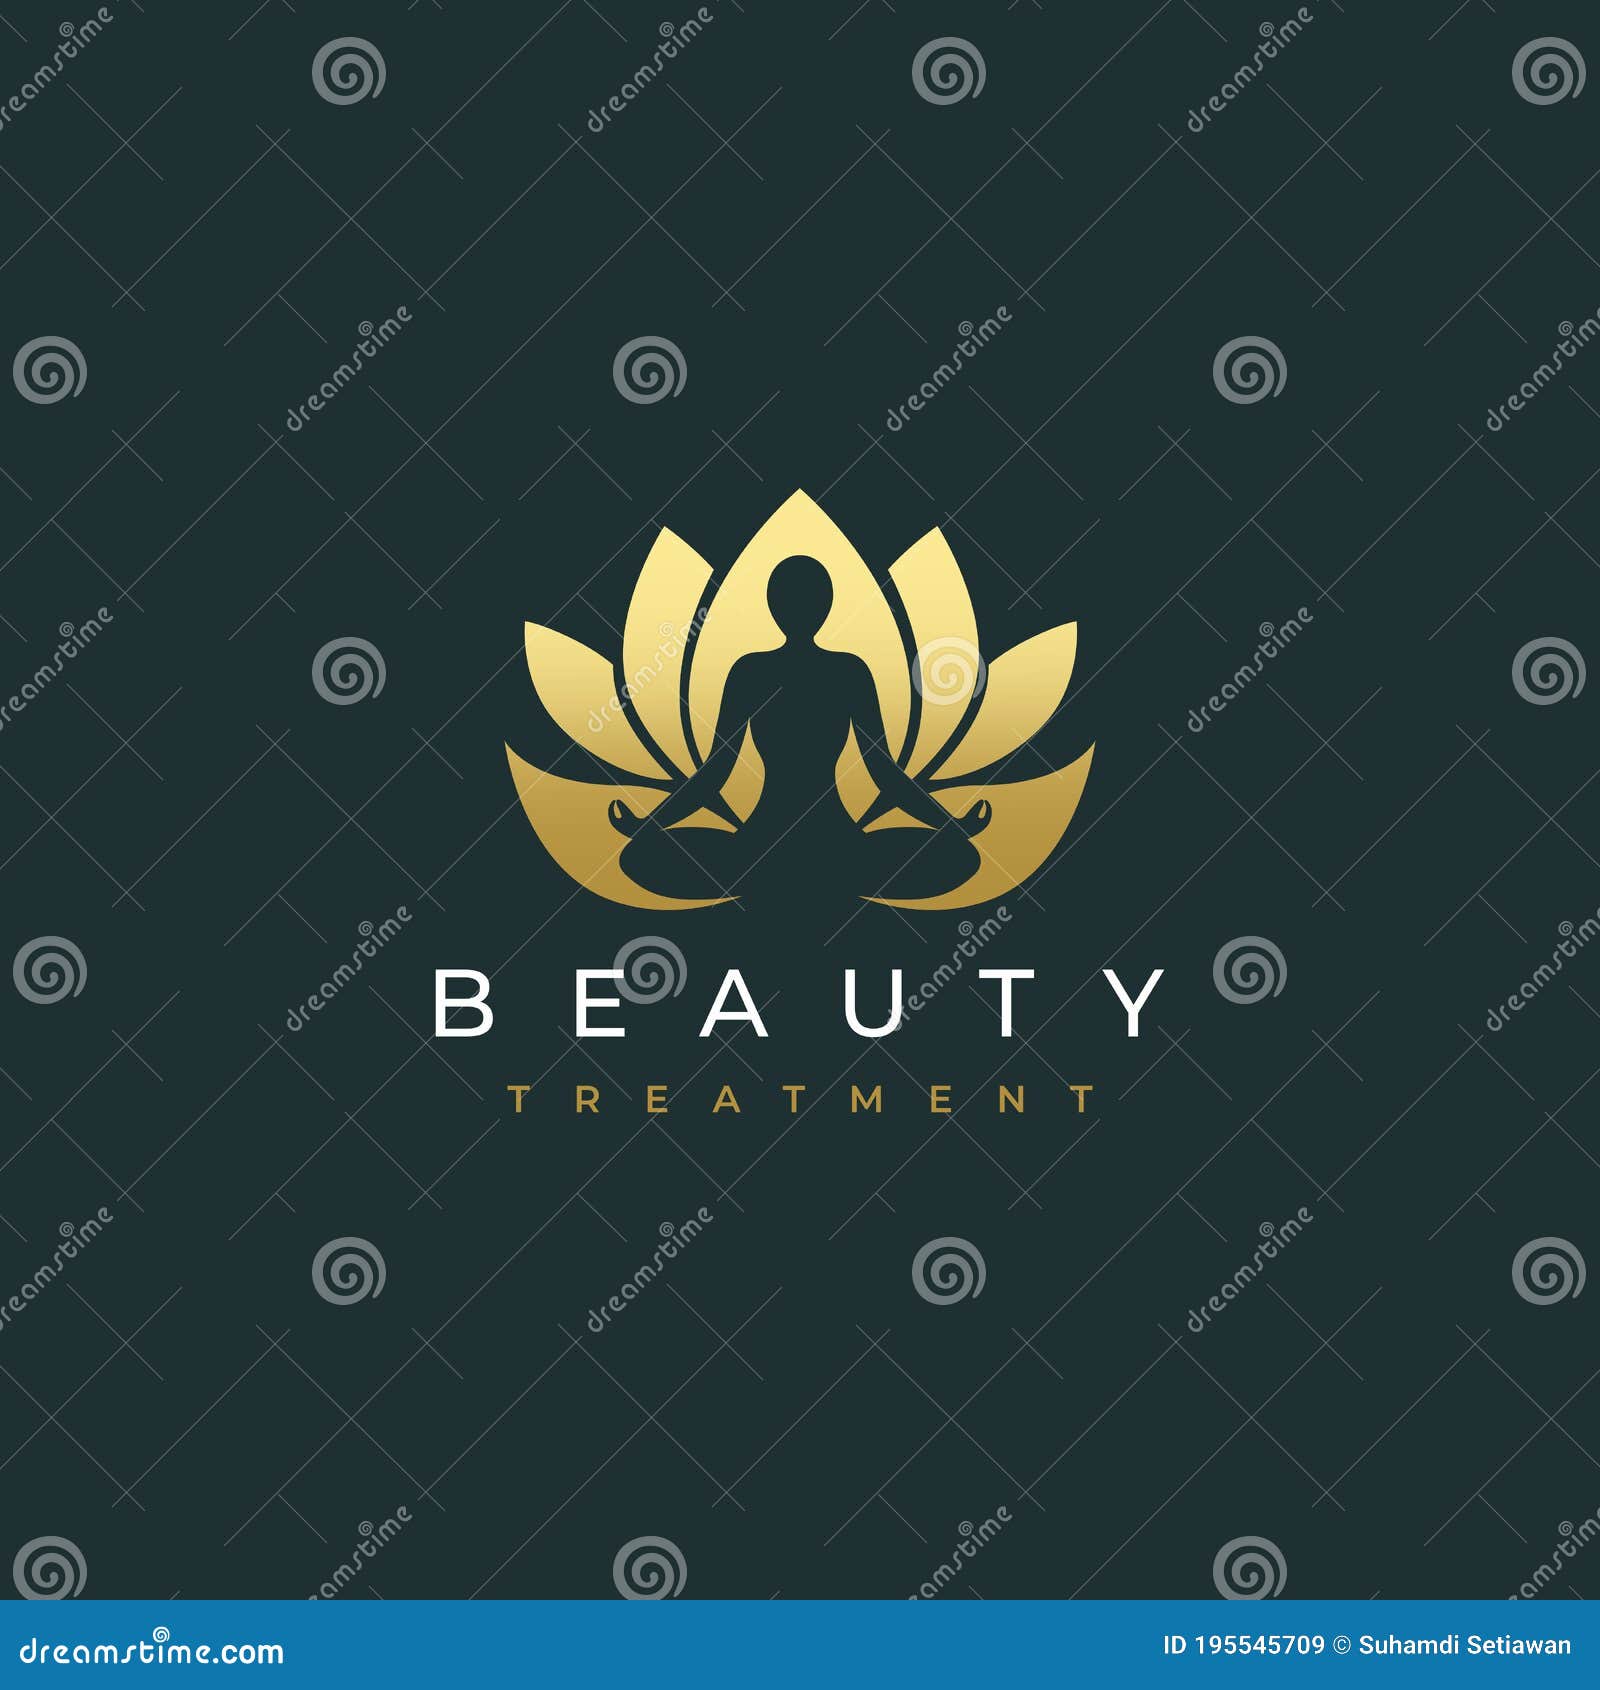 Photography Attractive Logo Design Template - MasterBundles